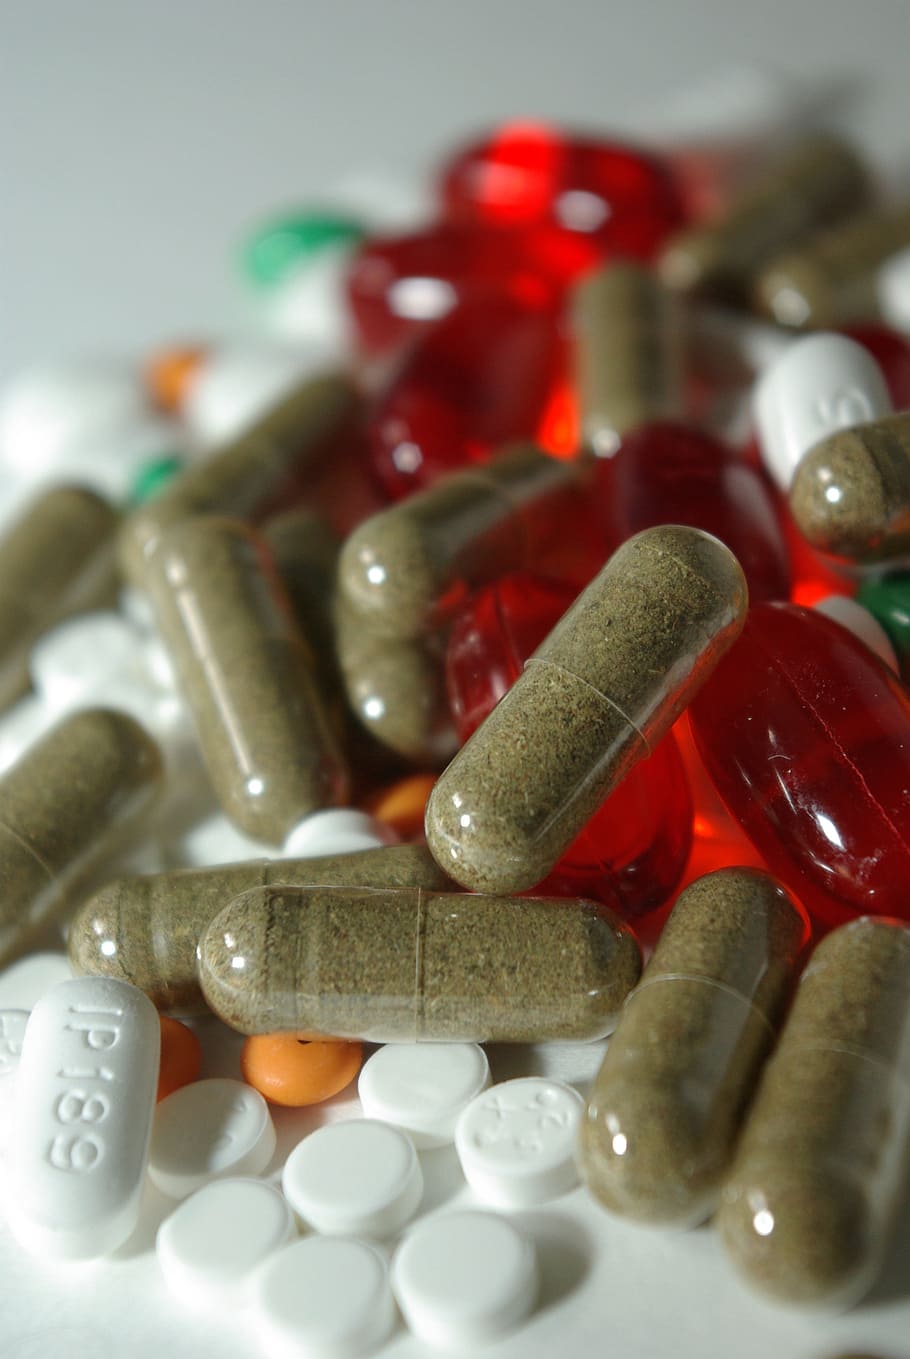 several medicinal capsules, pharmaceuticals, medicine, medical, health, drugs, medication, healthcare, pills, prescription